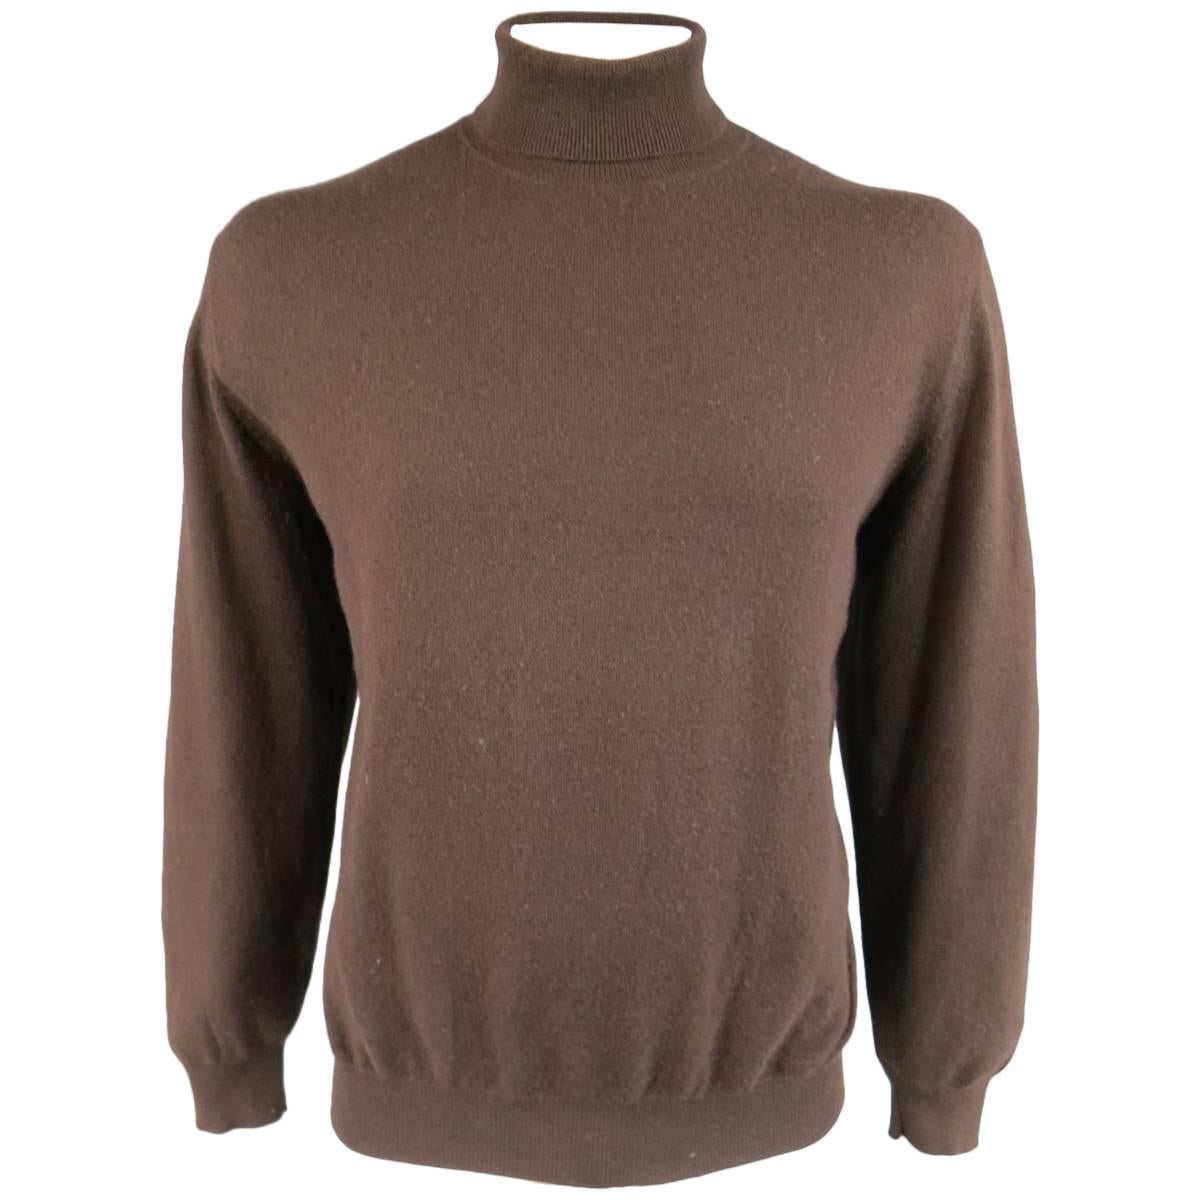 RALPH LAUREN Purple Label Size XL Chocolate Brown Cashmere Turtleneck Sweater